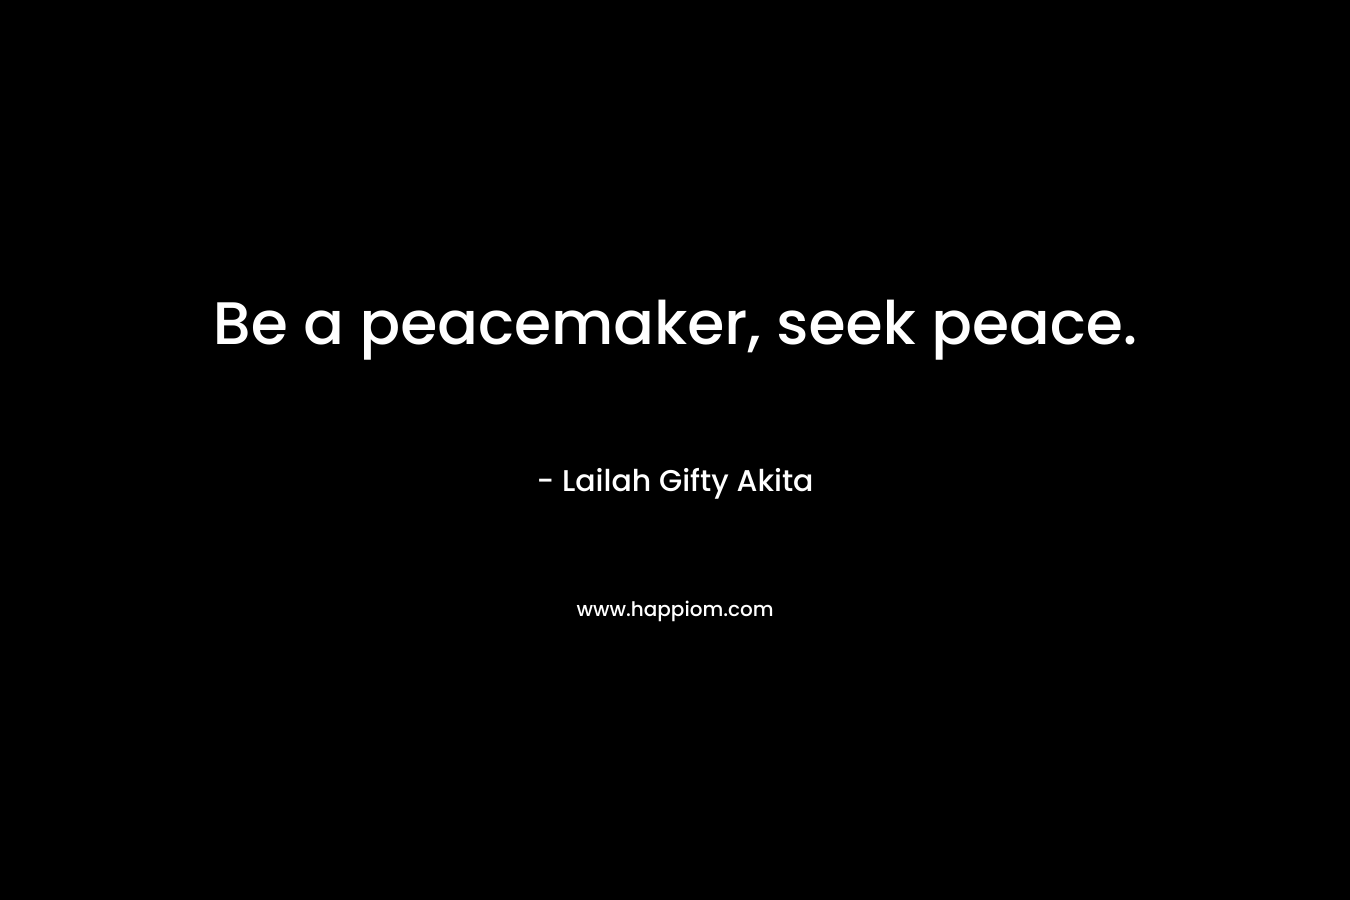 Be a peacemaker, seek peace.